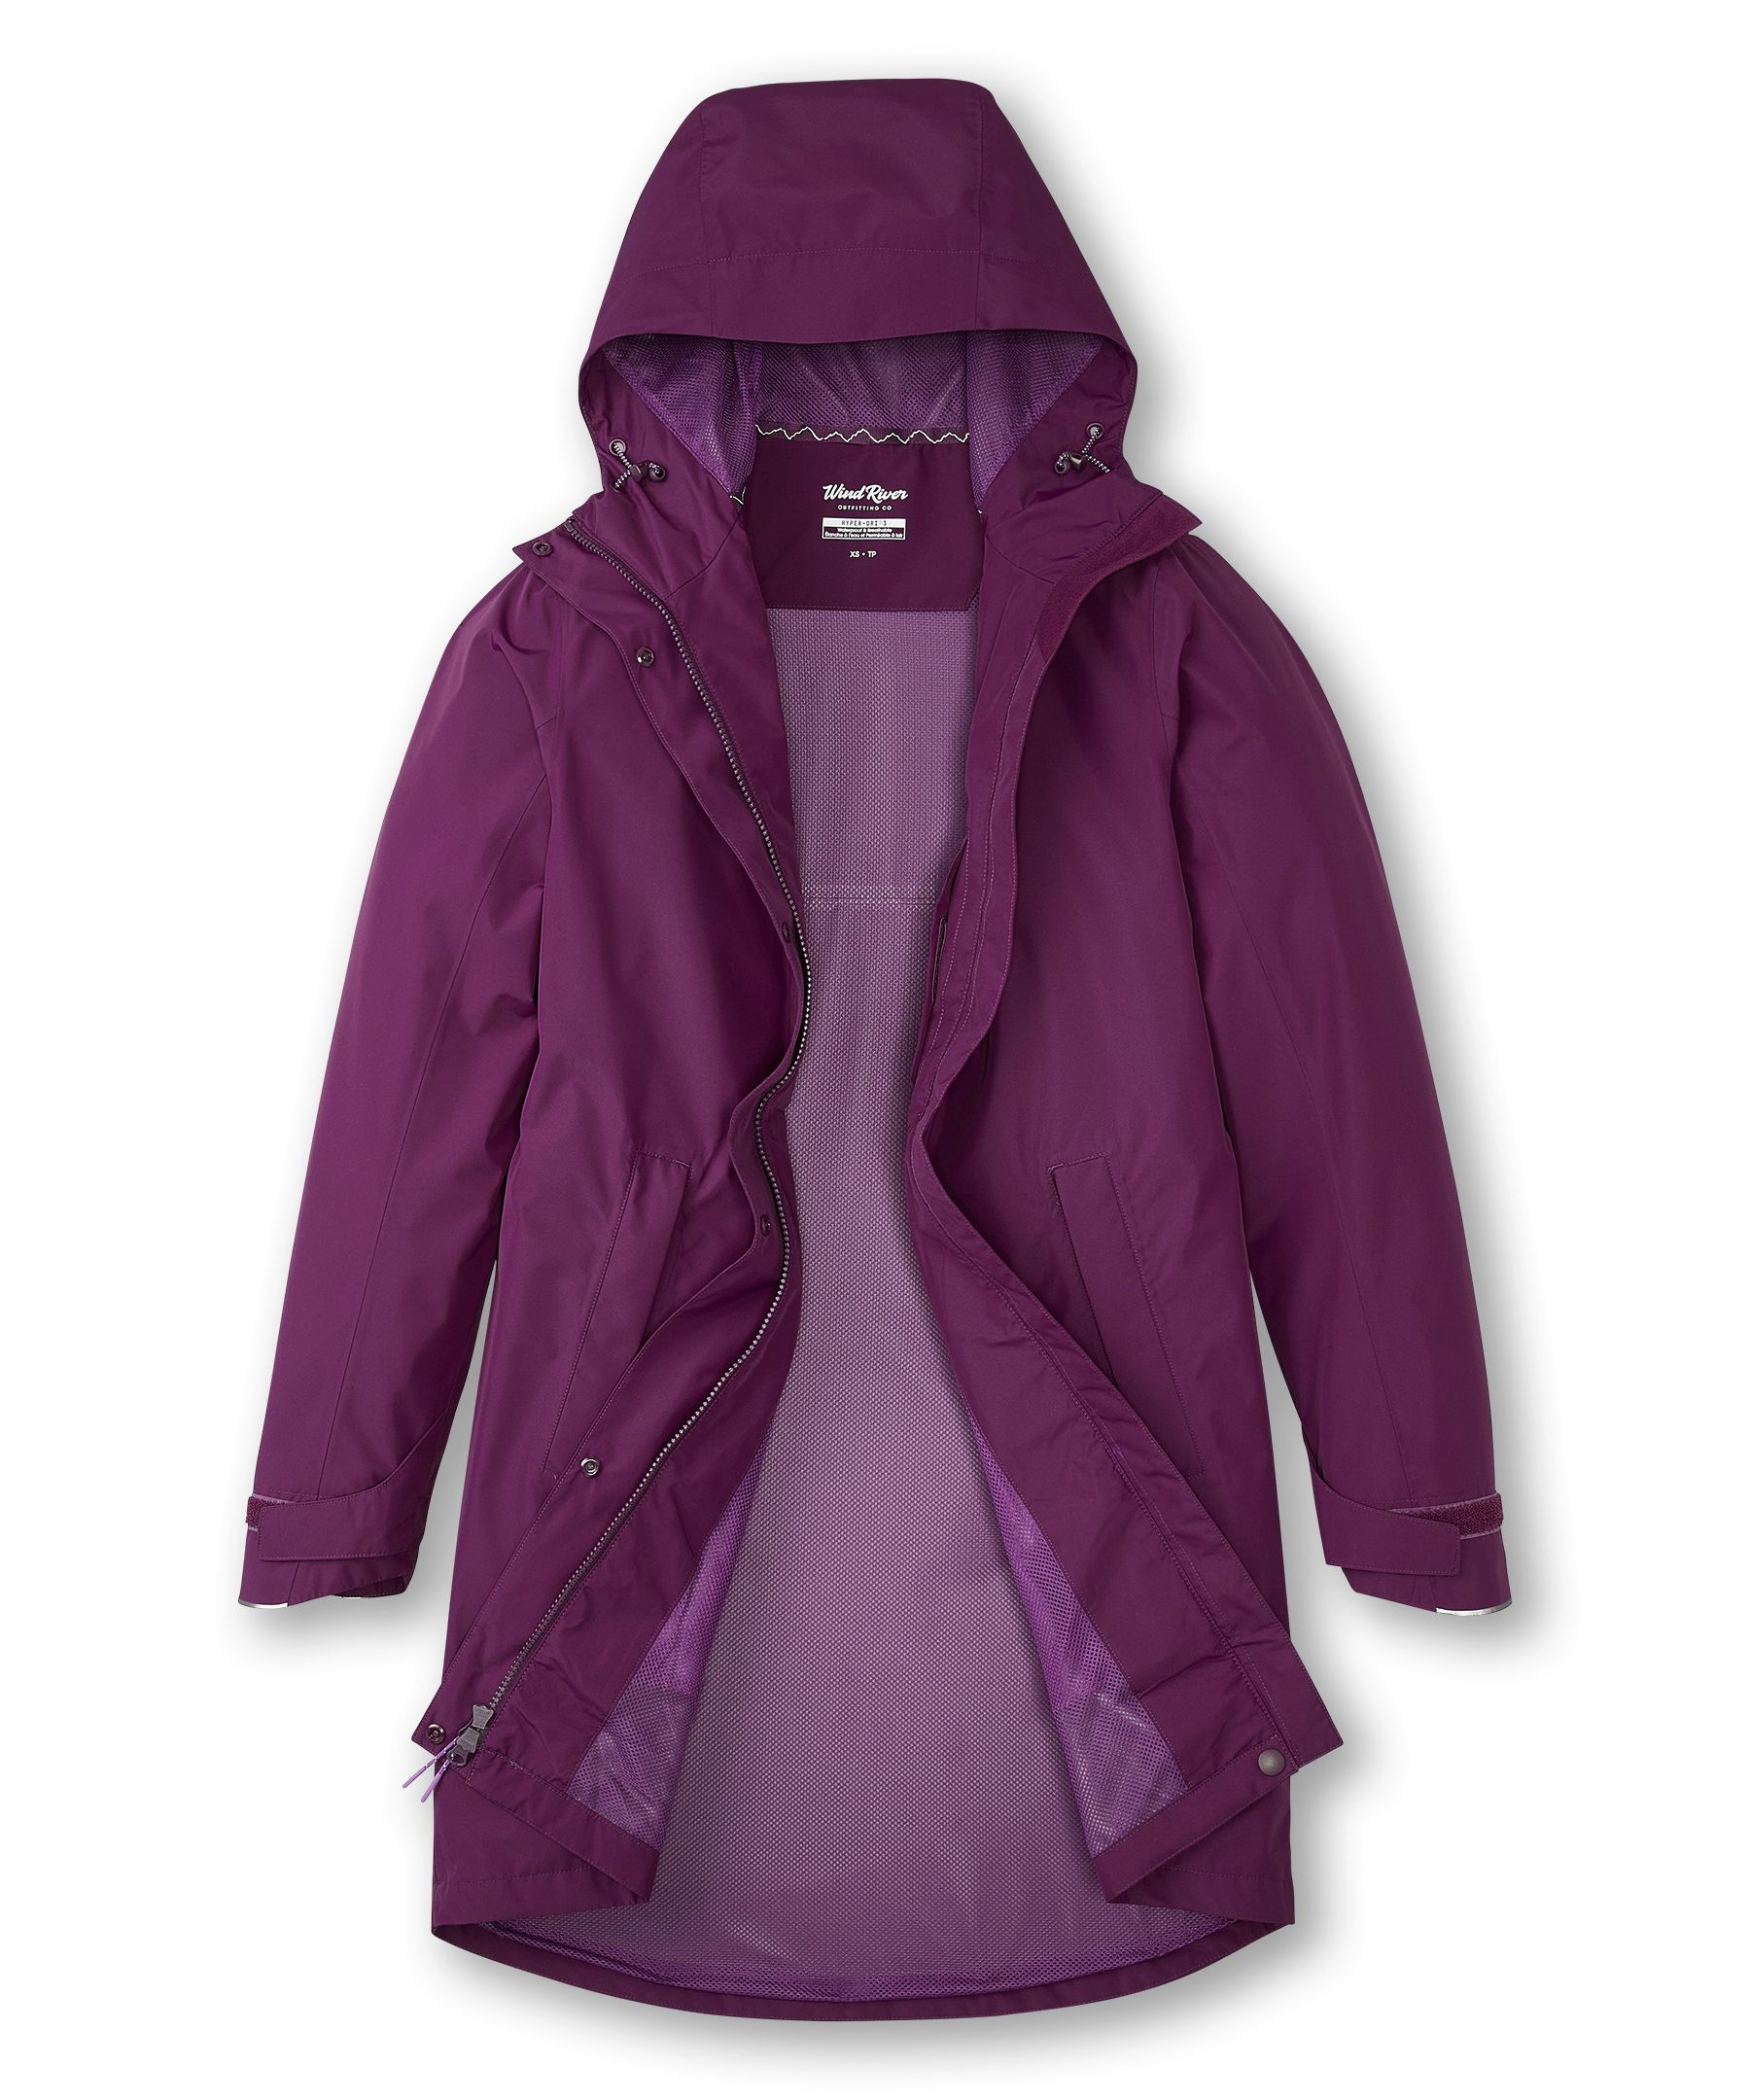 Xl Long Hooded Rain Coat For Adults, Rain Jacket For Men Women Youth